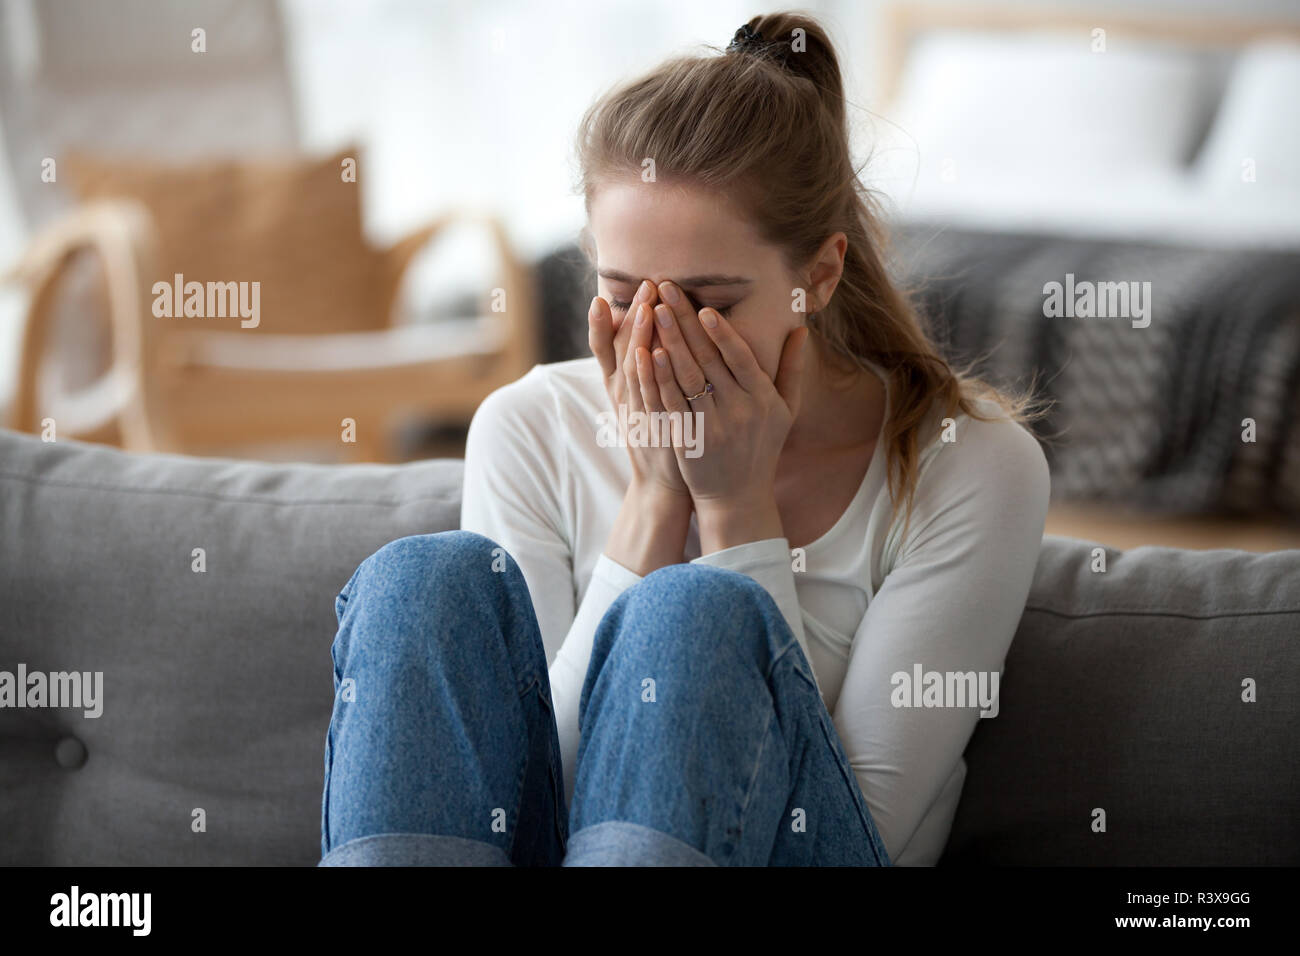 Upset girl sit on sofa crying after breakup Stock Photo